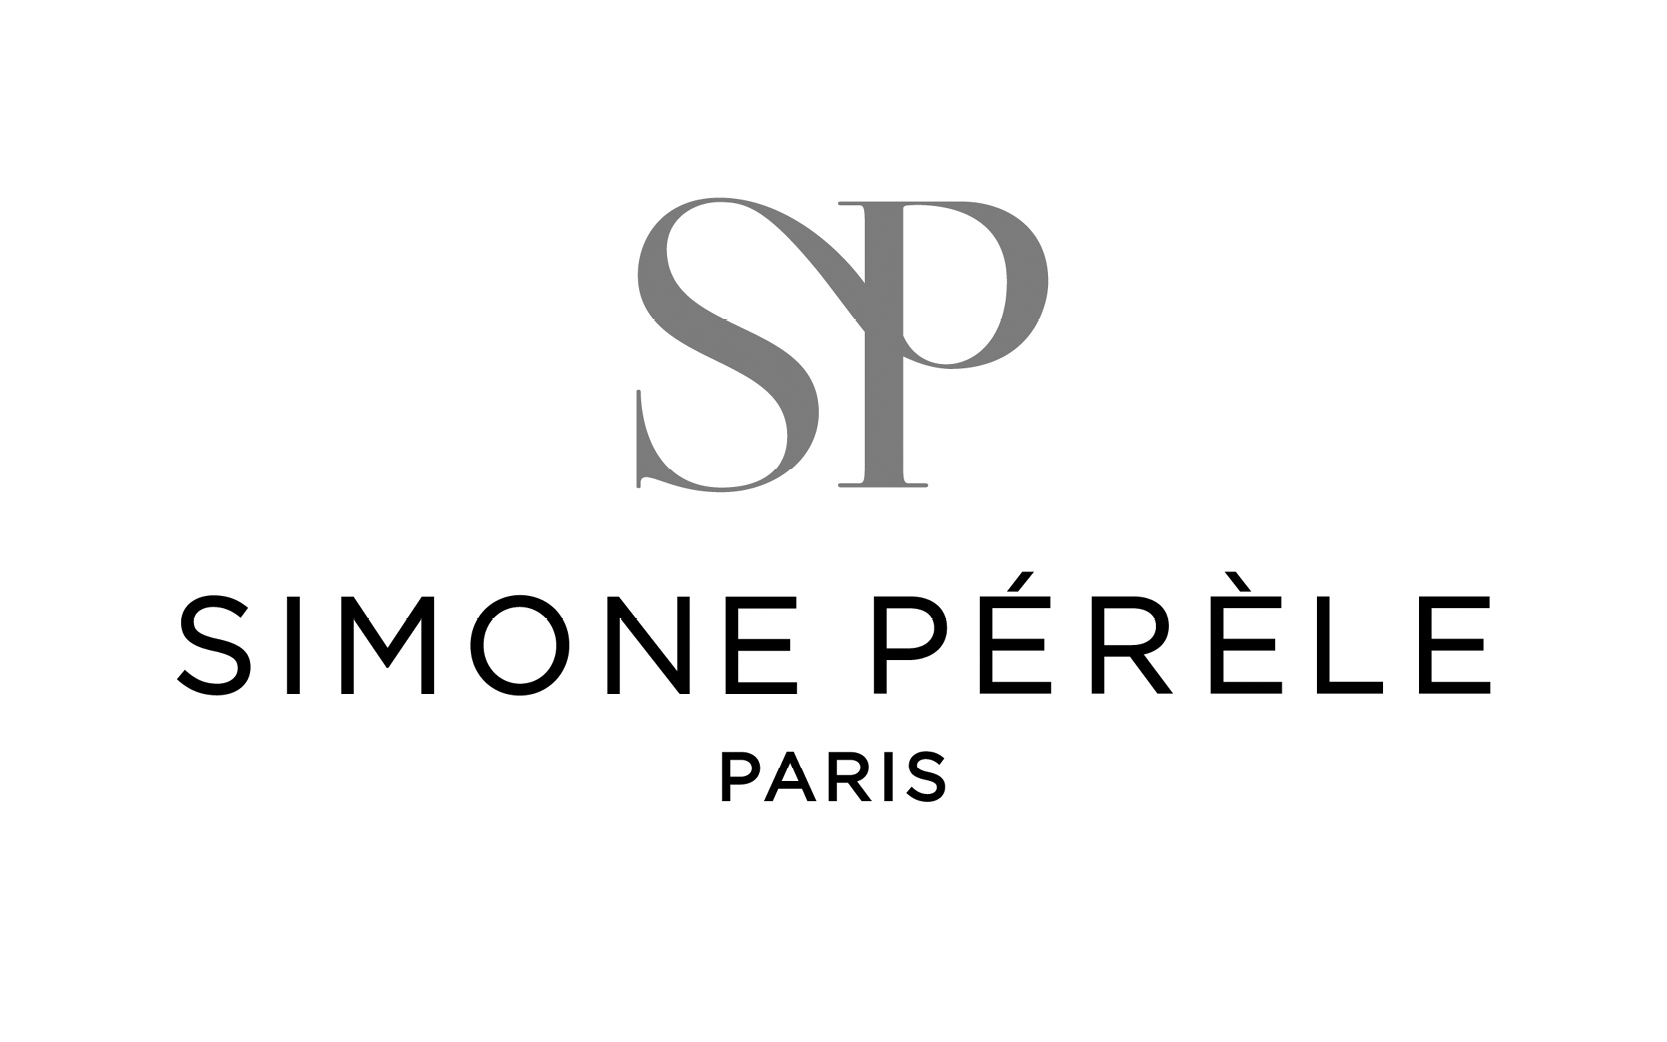 Experience simone. Логотипы брендов Нижнего белья. Simone Perele логотип. Логотипы брендов Нижнего белья для женщин. Знаменитые бренды Нижнего белья.